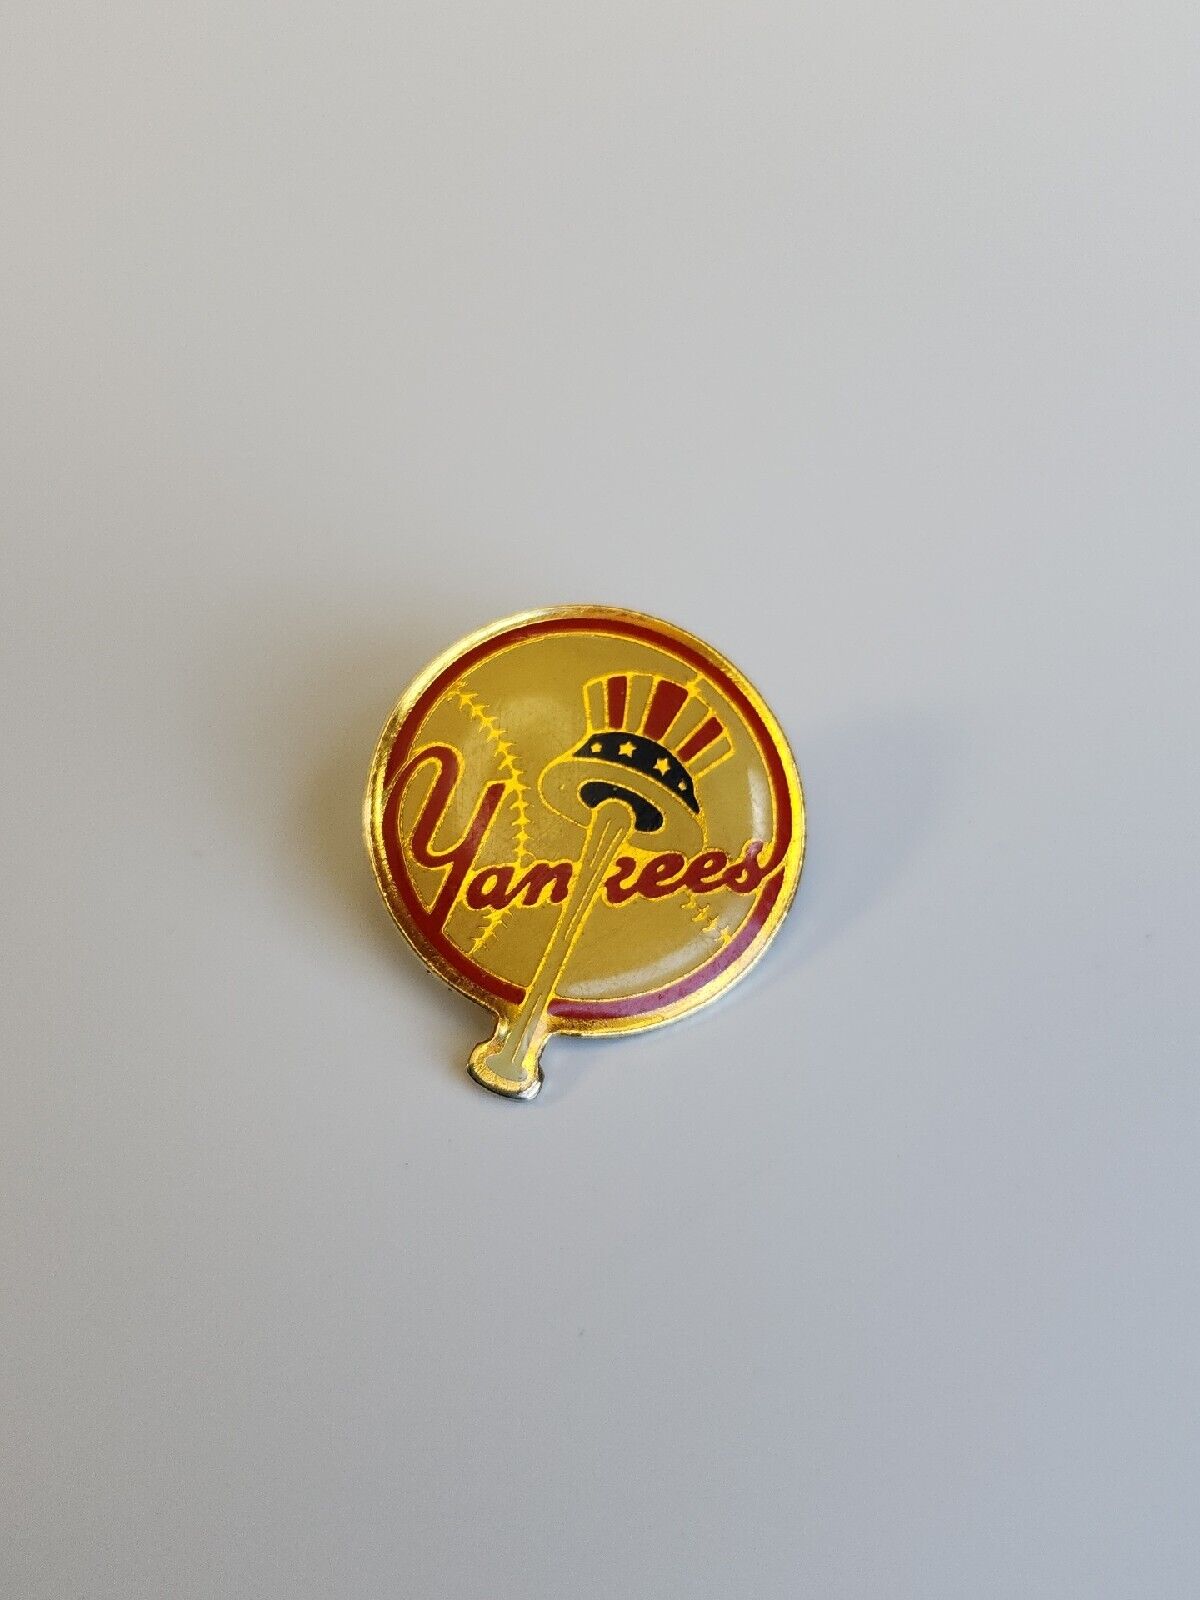 New York Yankees Souvenir Lapel Pin Vintage 1989 Eastman Kodak